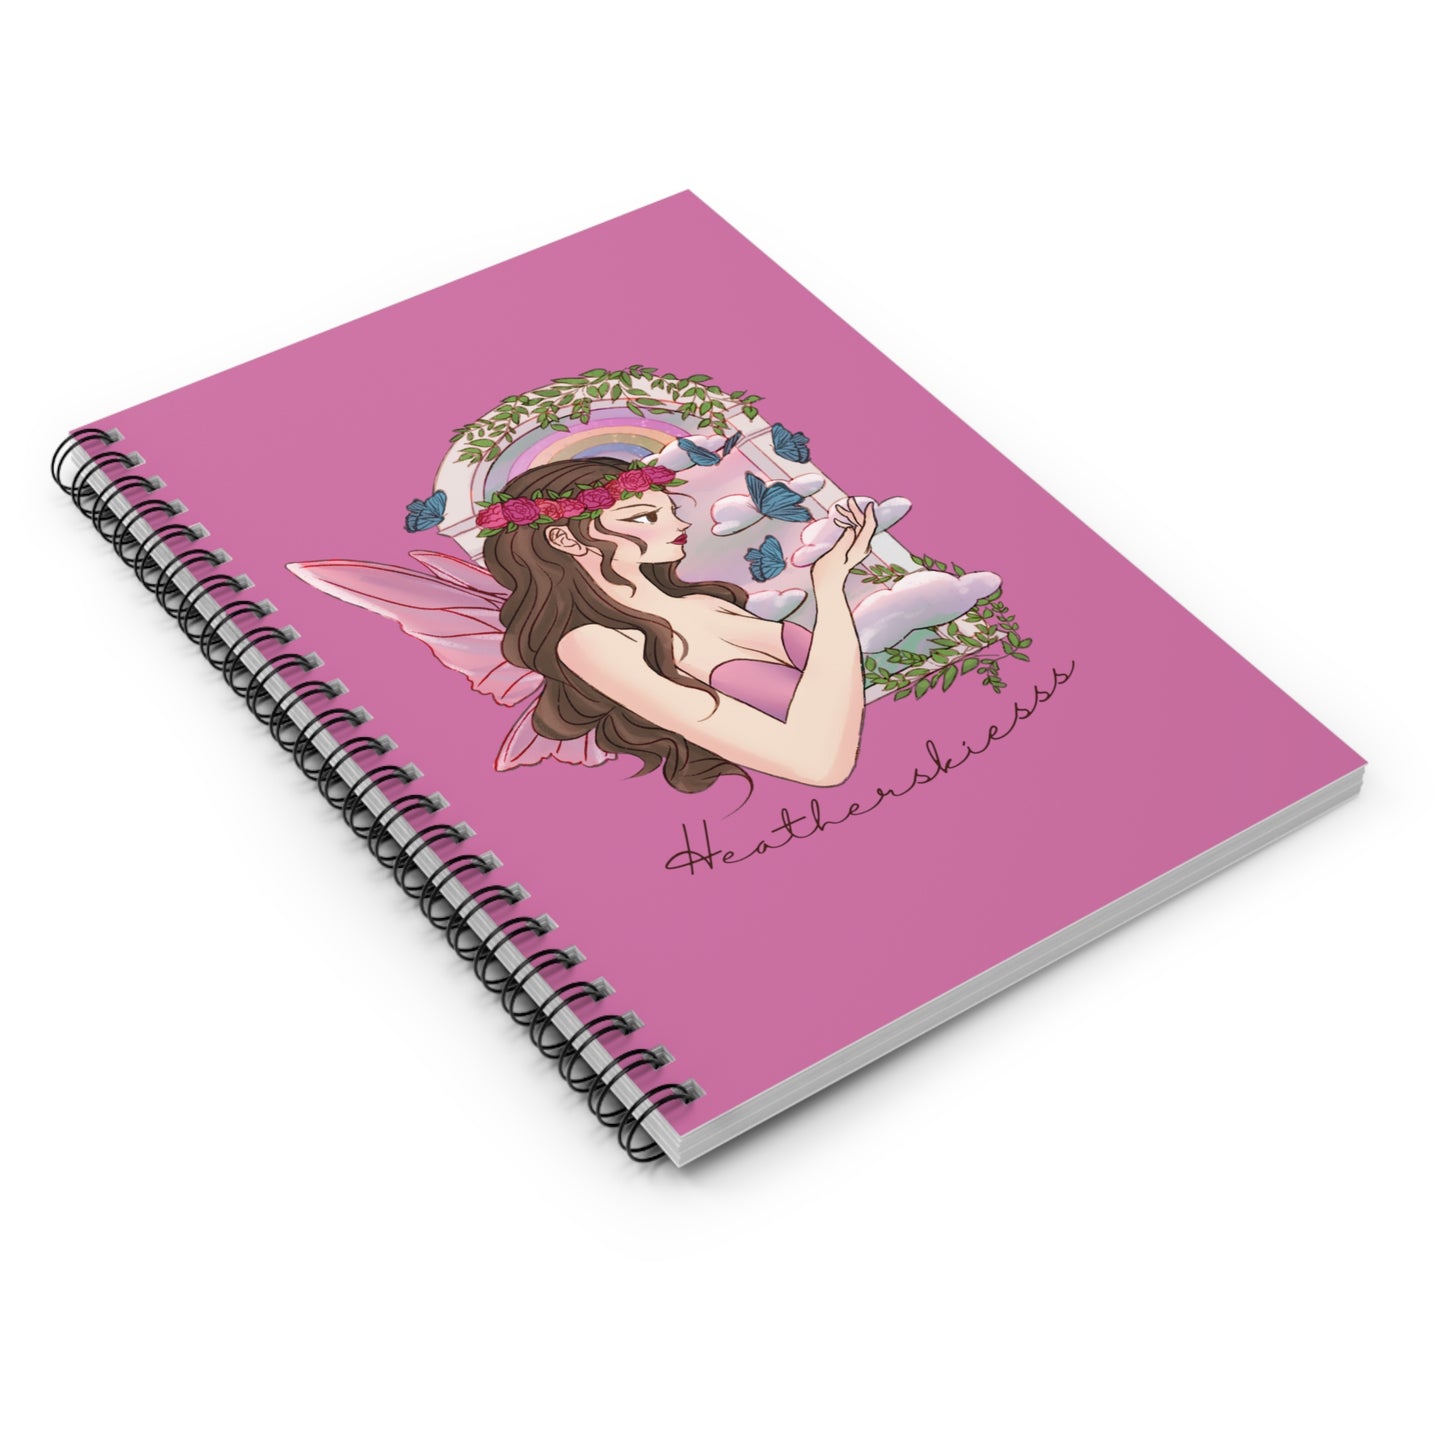 Heatherskiesss Fairy Notebook